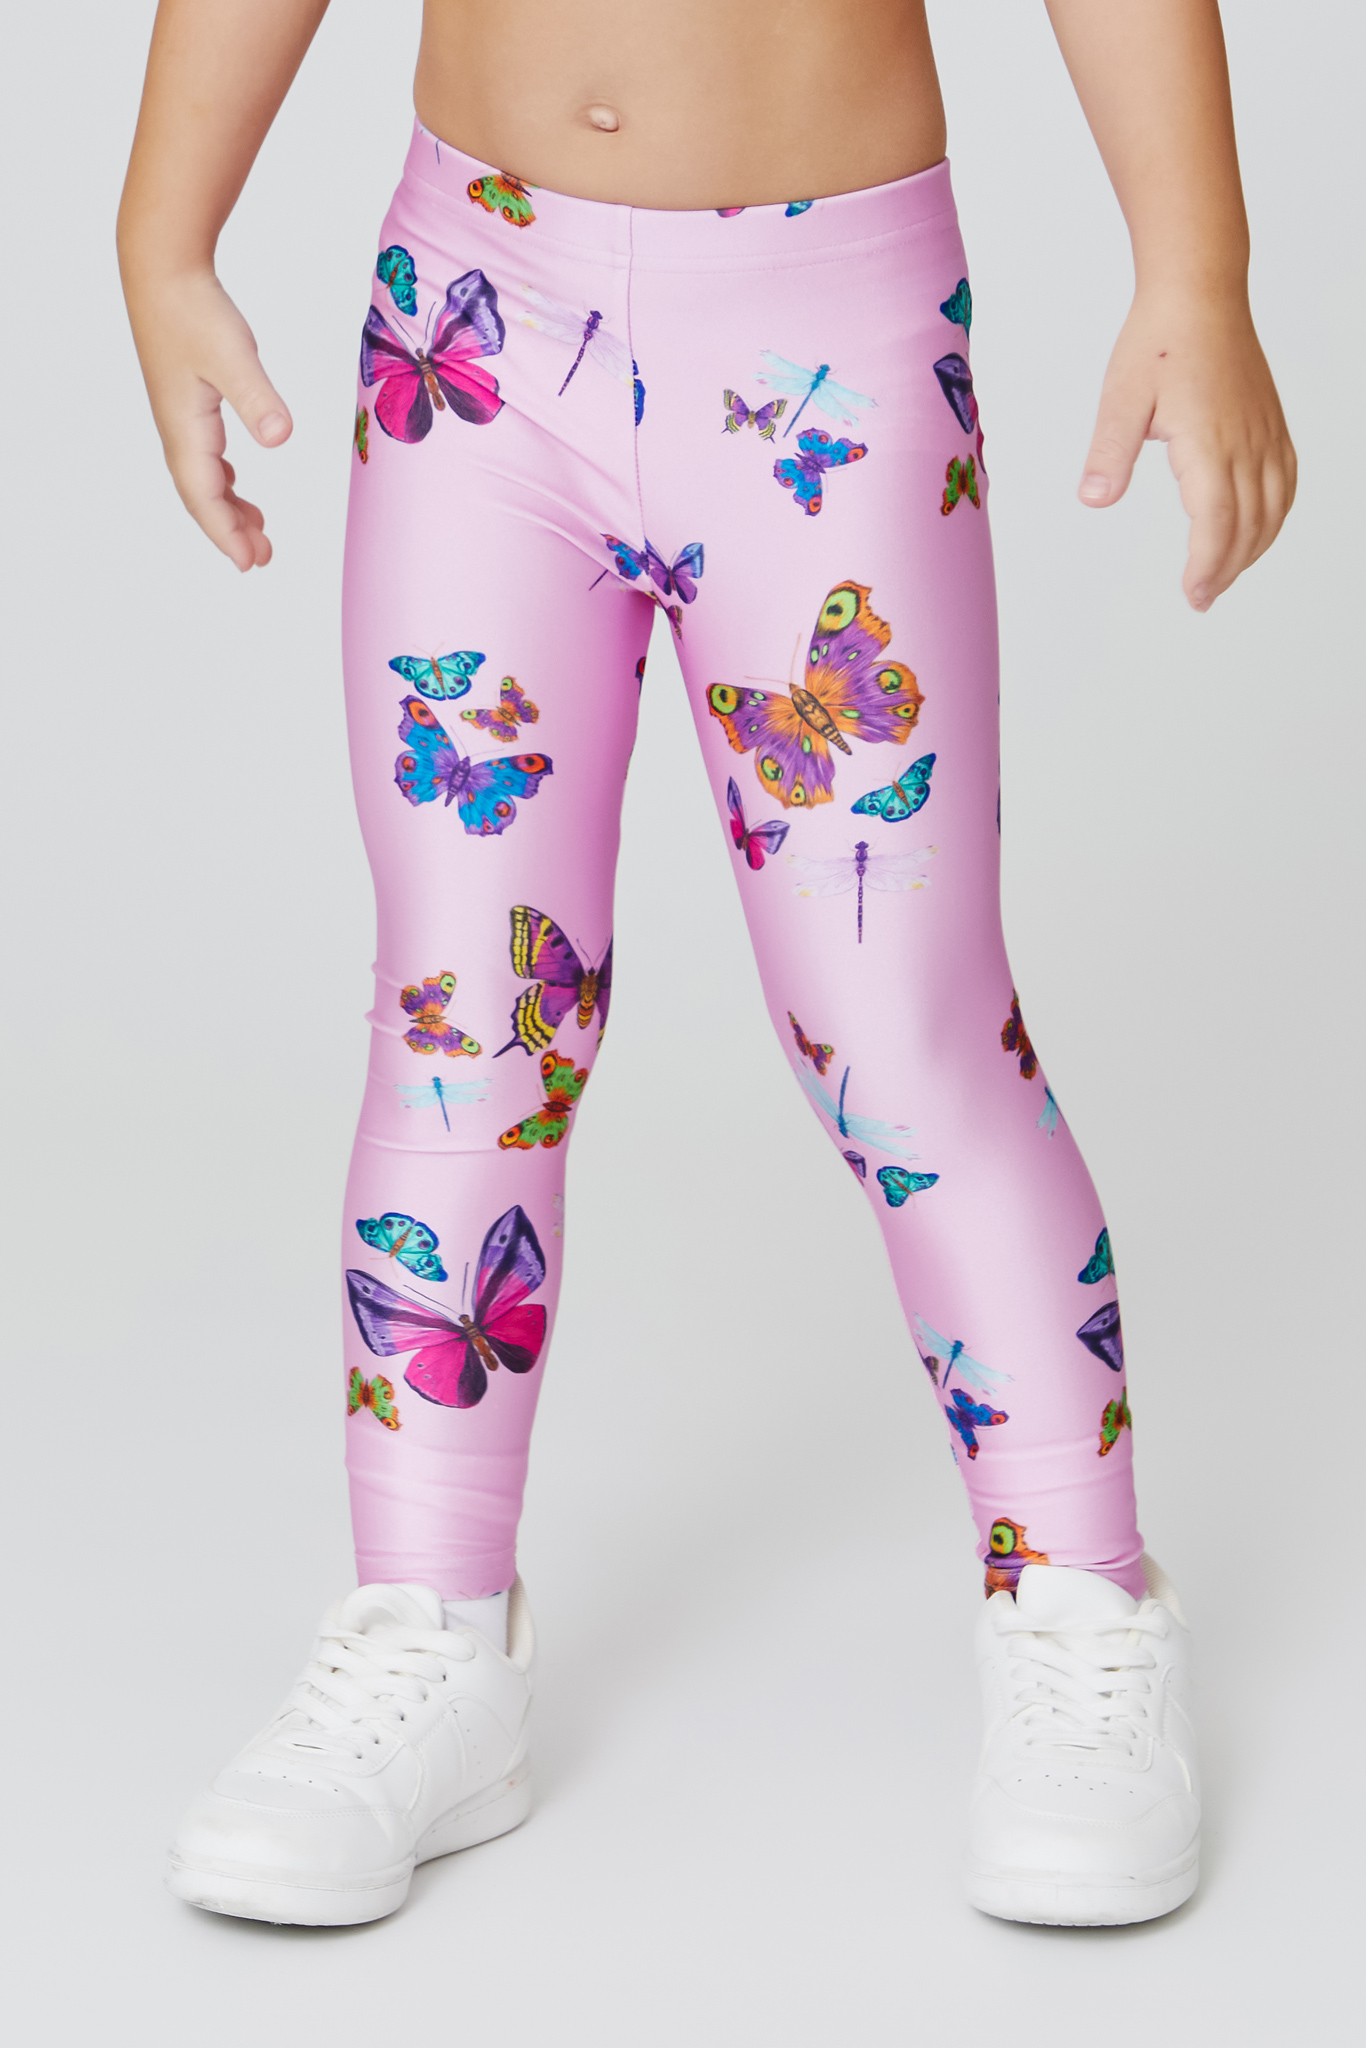 Toddler Leggings in Pink Neon Butterflies –